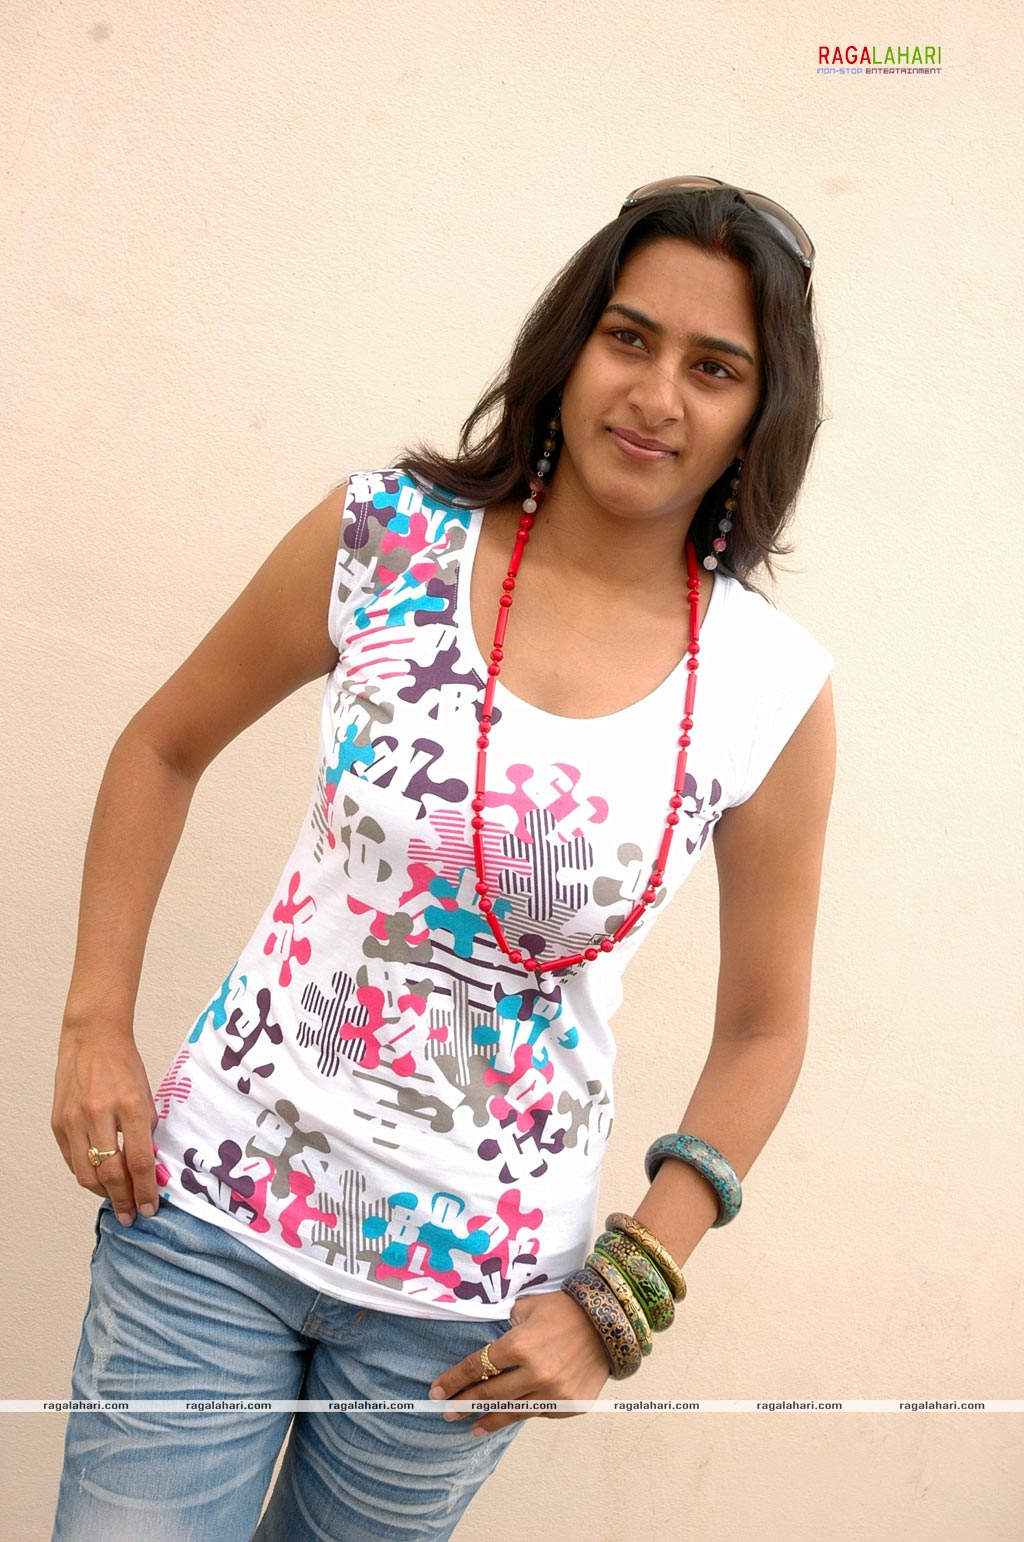 Surekha Vani